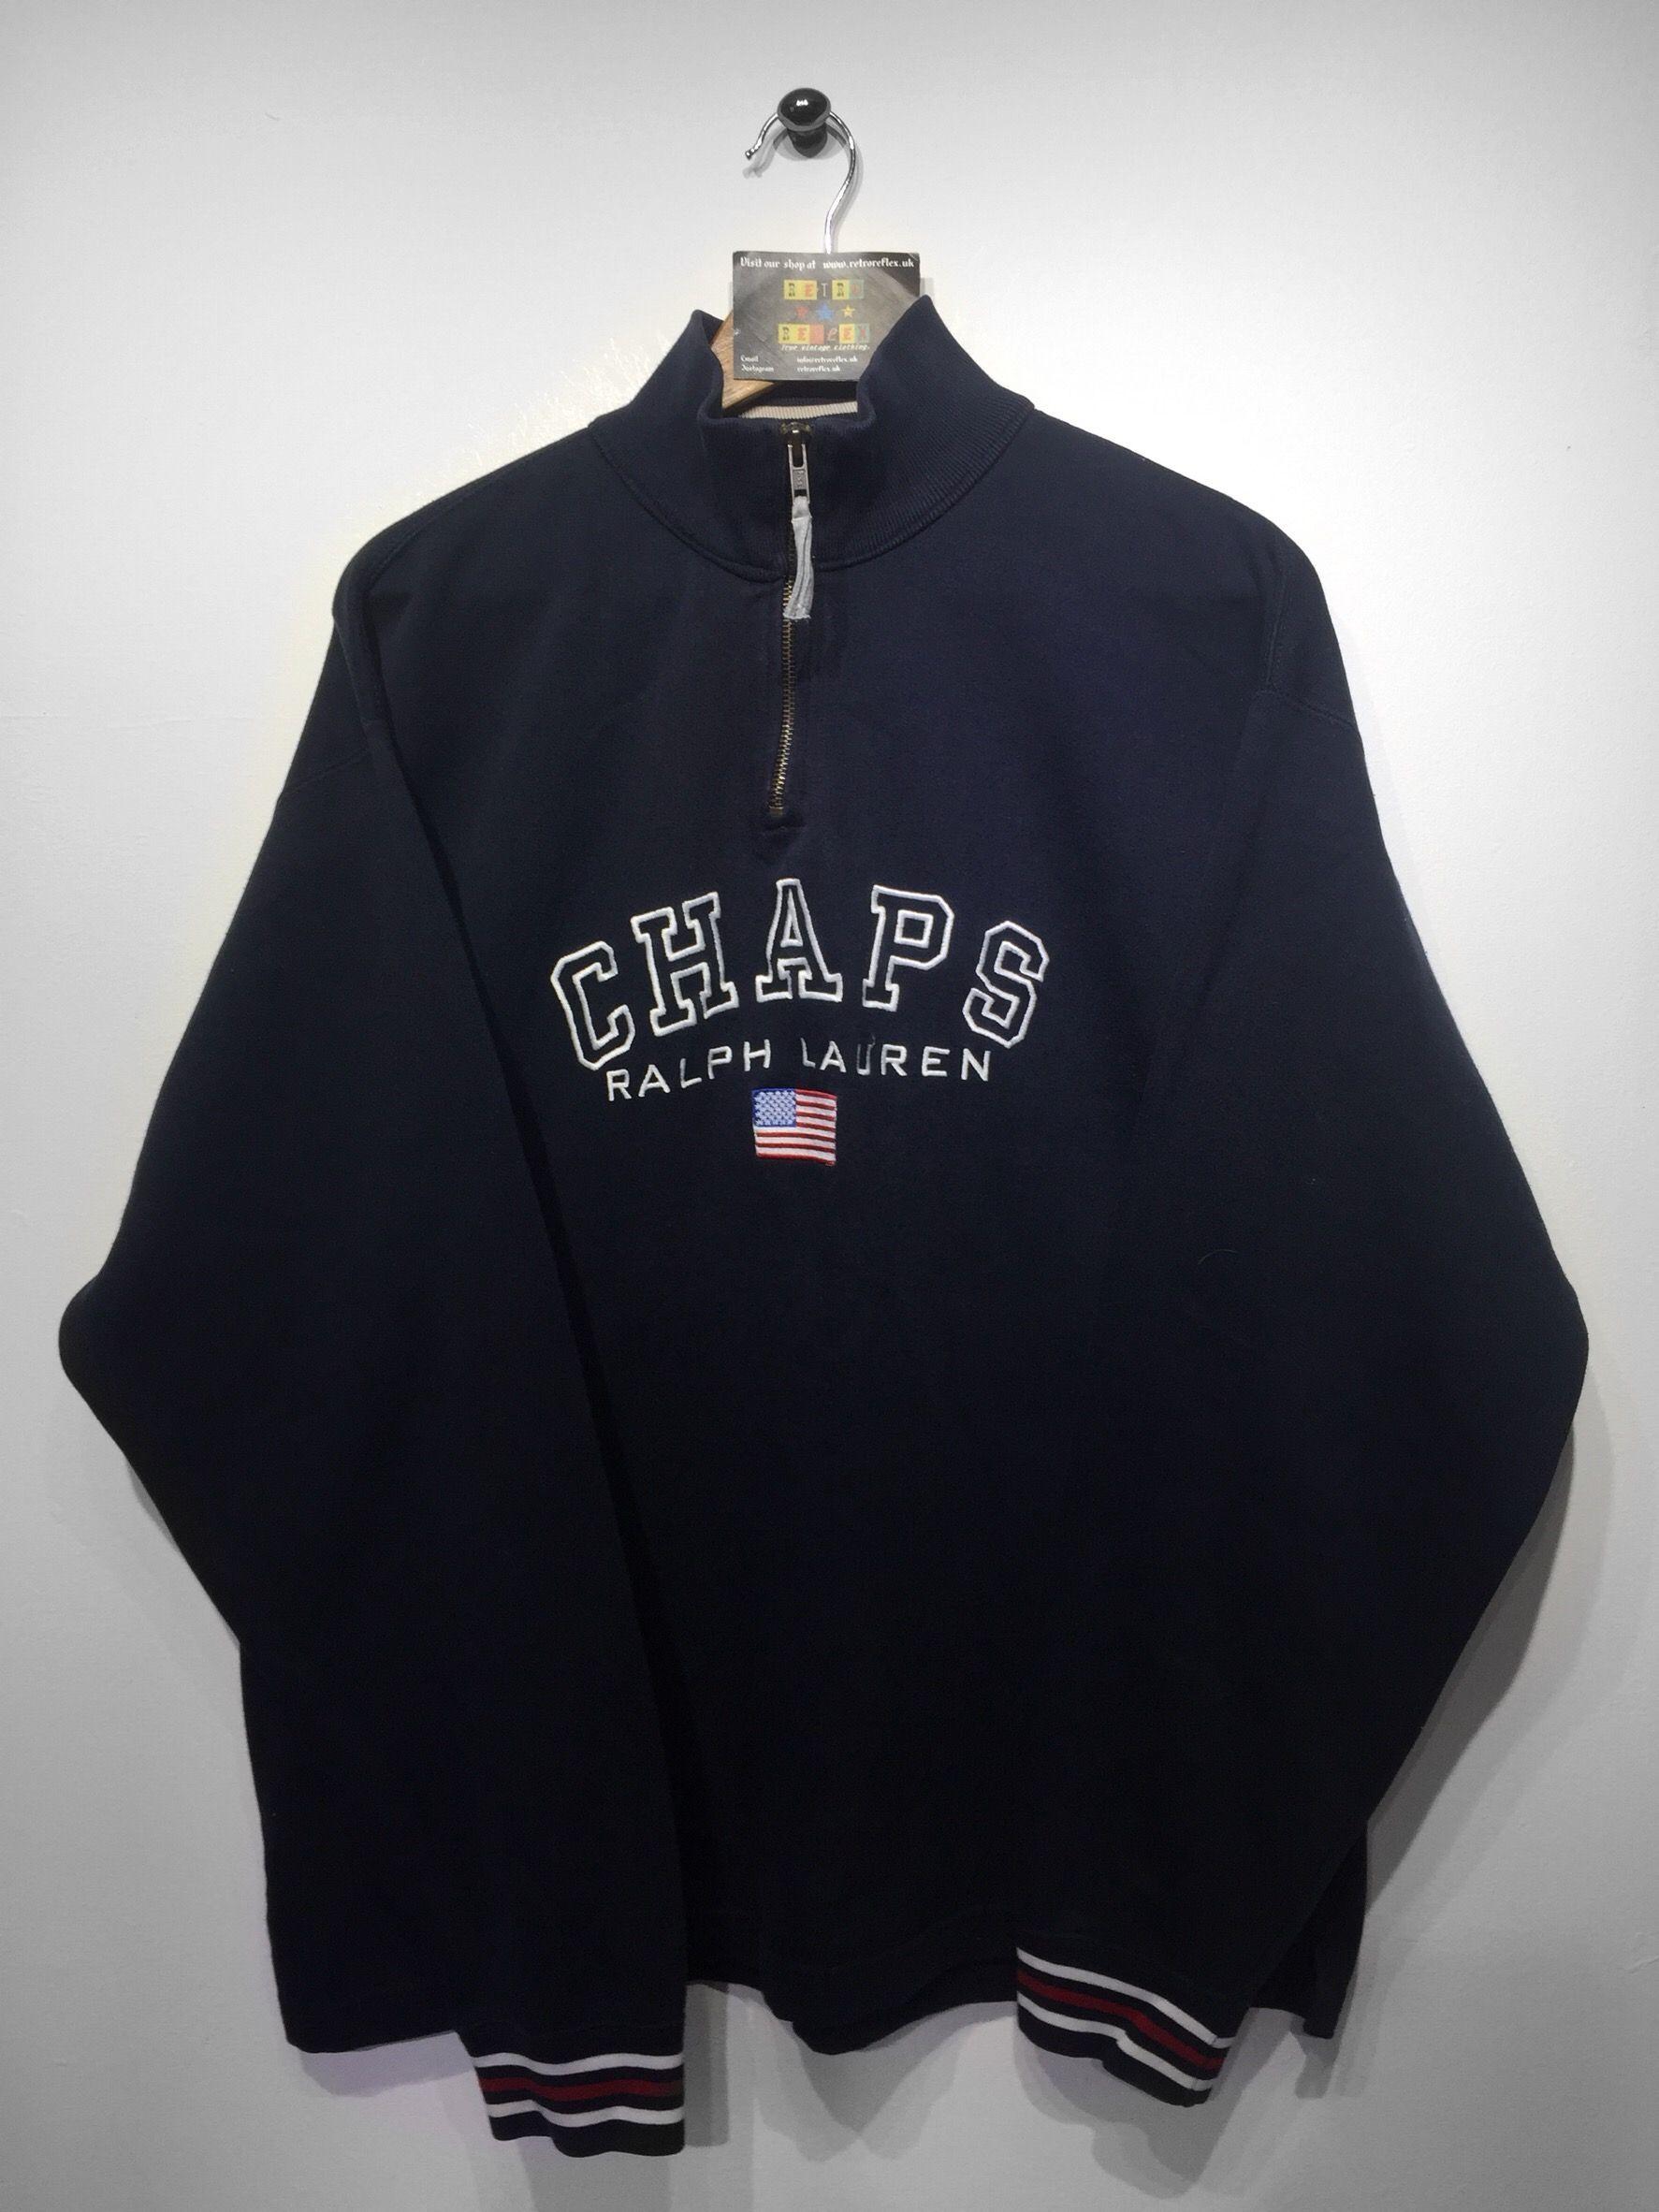 Chaps Clothing Logo - Ralph Lauren Chaps Sweatshirt size Large (but Fits Oversized) £50